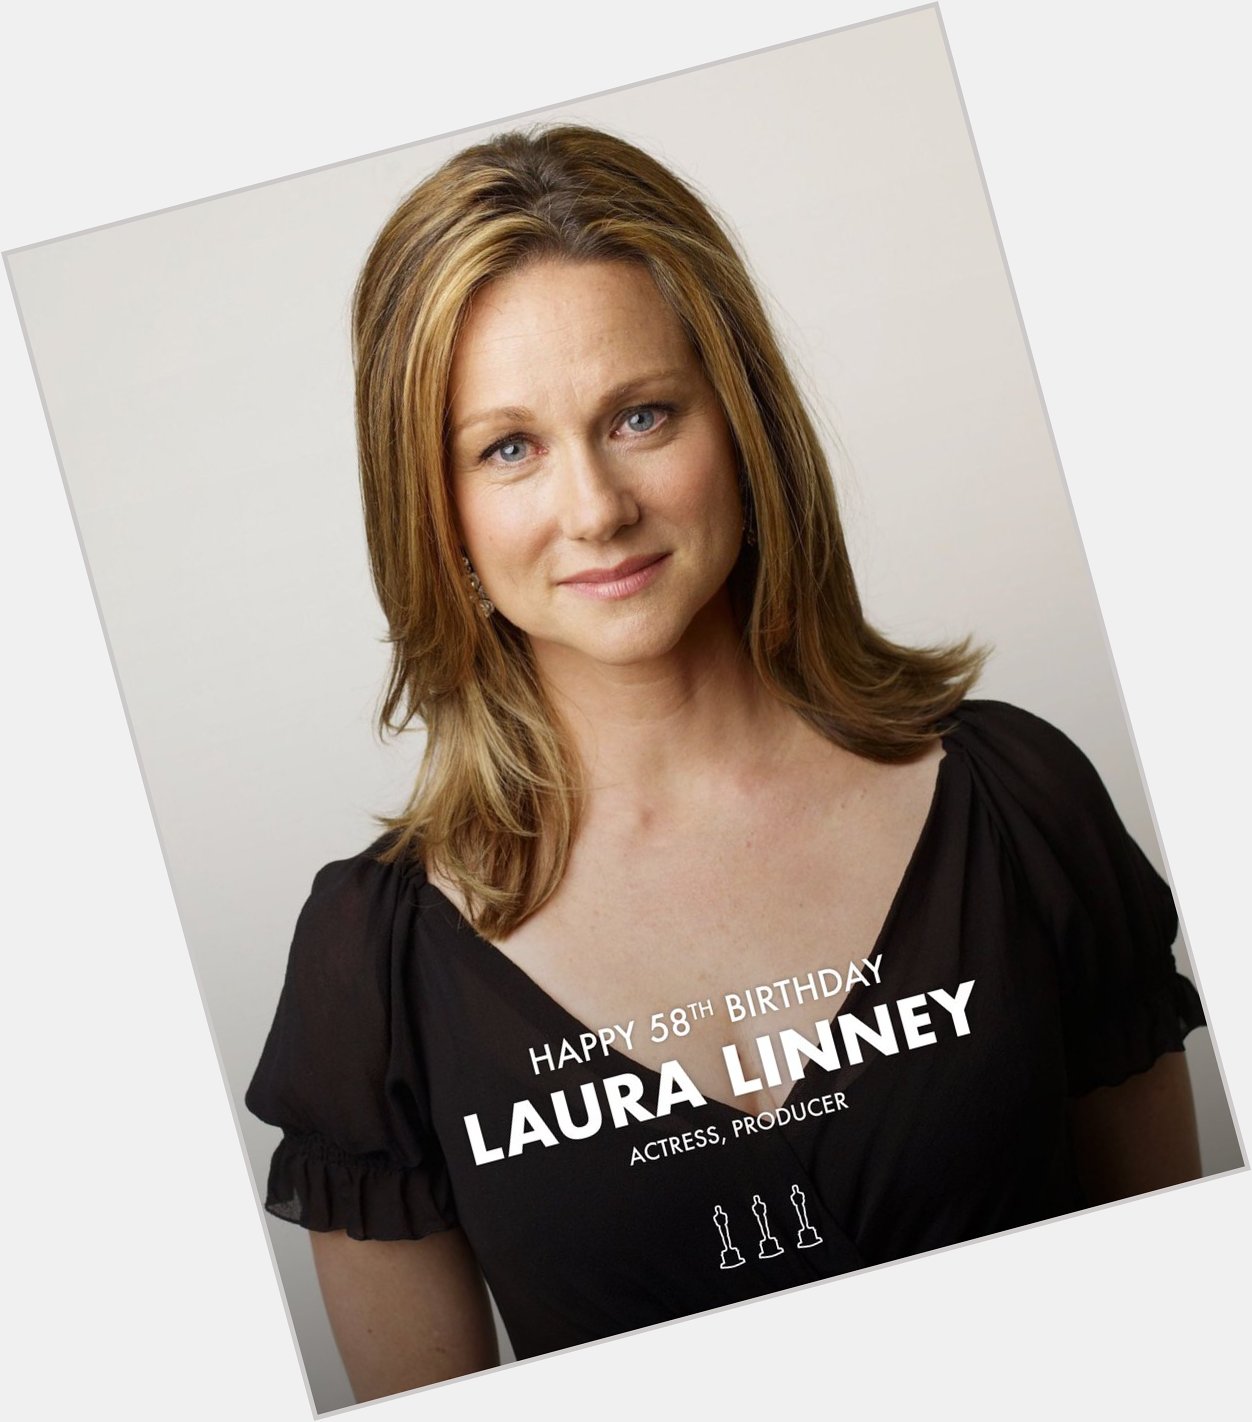 Happy 58th Birthday to Laura Linney.    